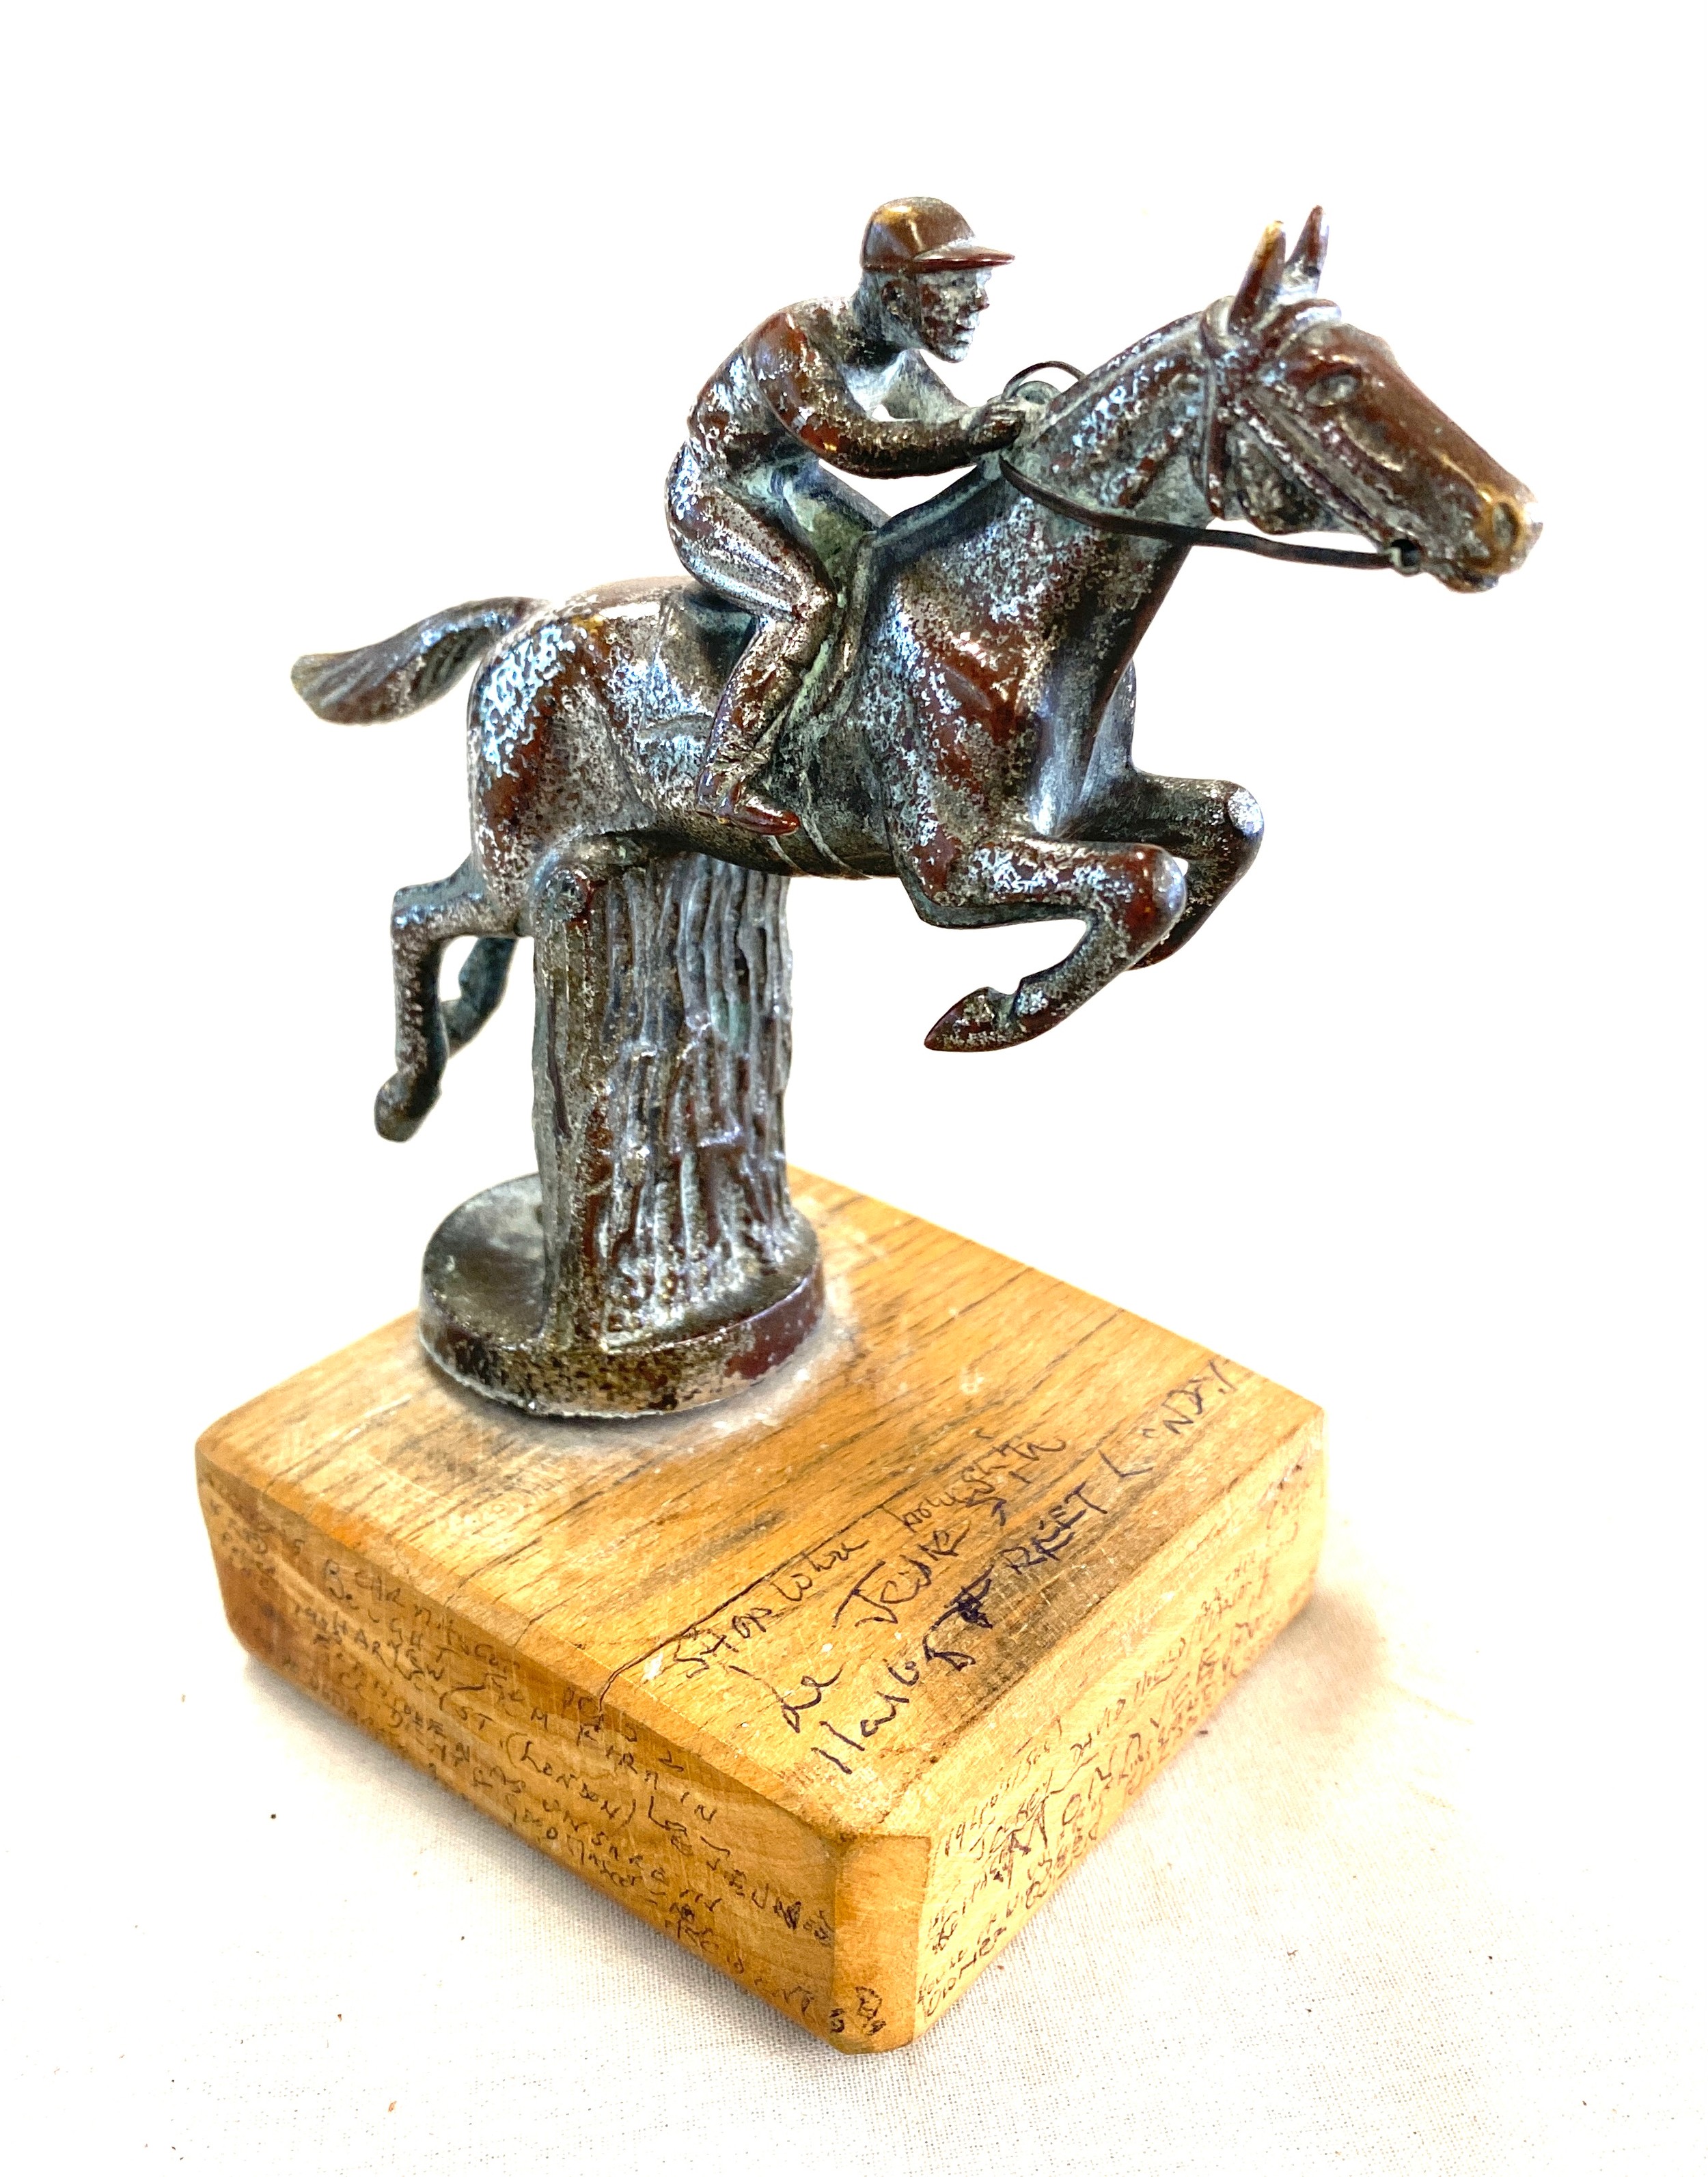 Scarce original 1920's chrome plated bronze car mascot of a race horse - Image 2 of 5